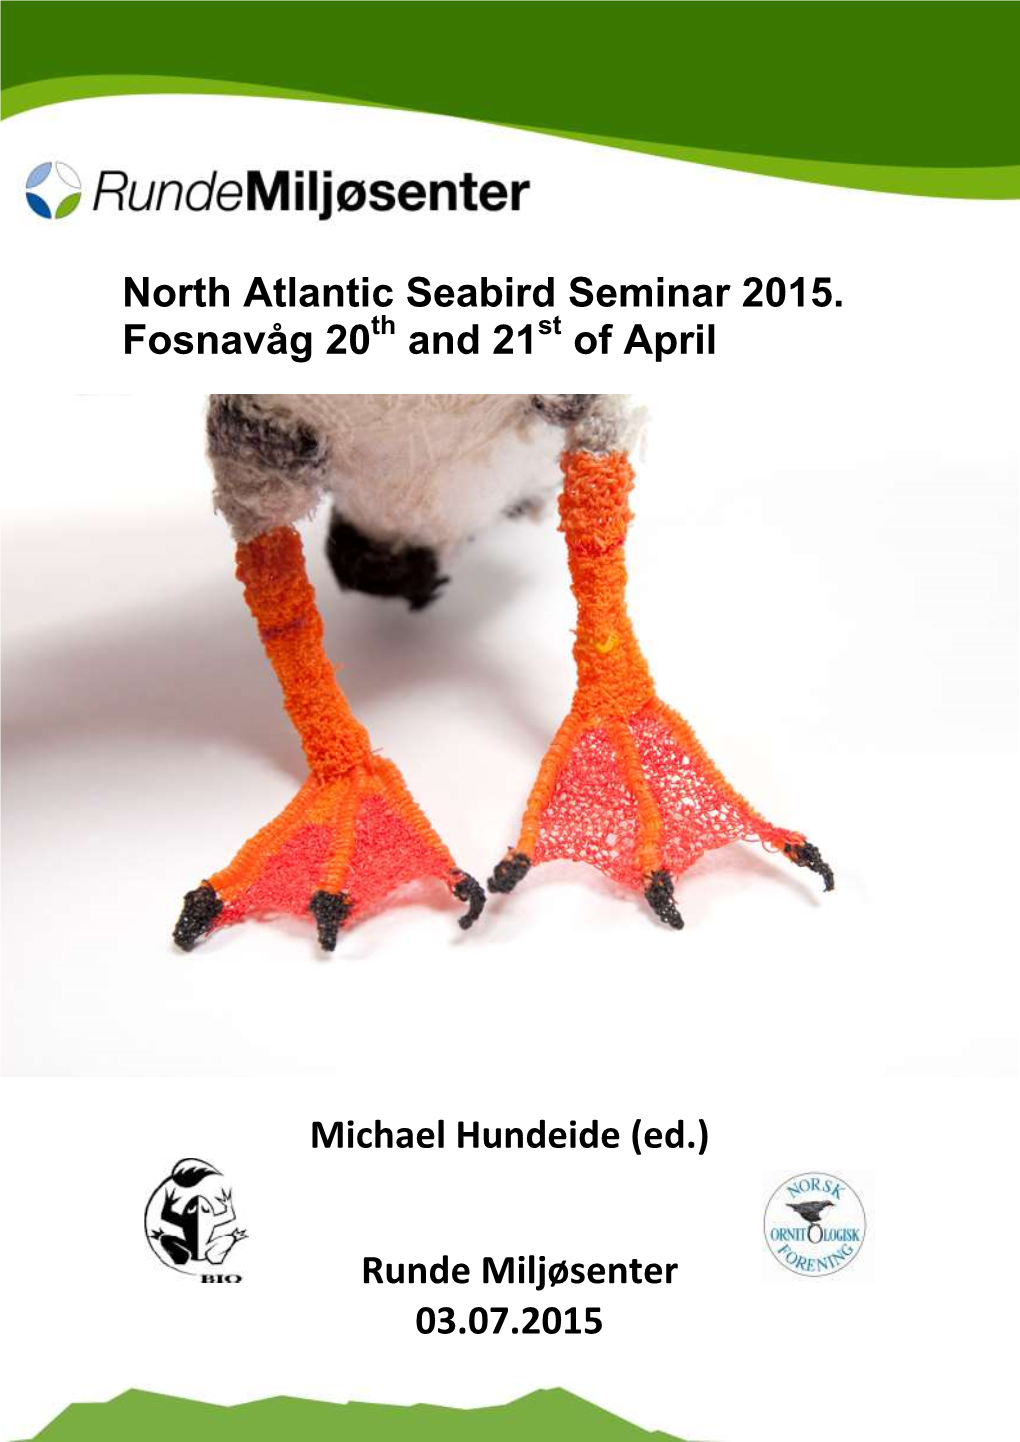 North Atlantic Seabird Seminar 2015. Fosnavåg 20Th and 21St of April